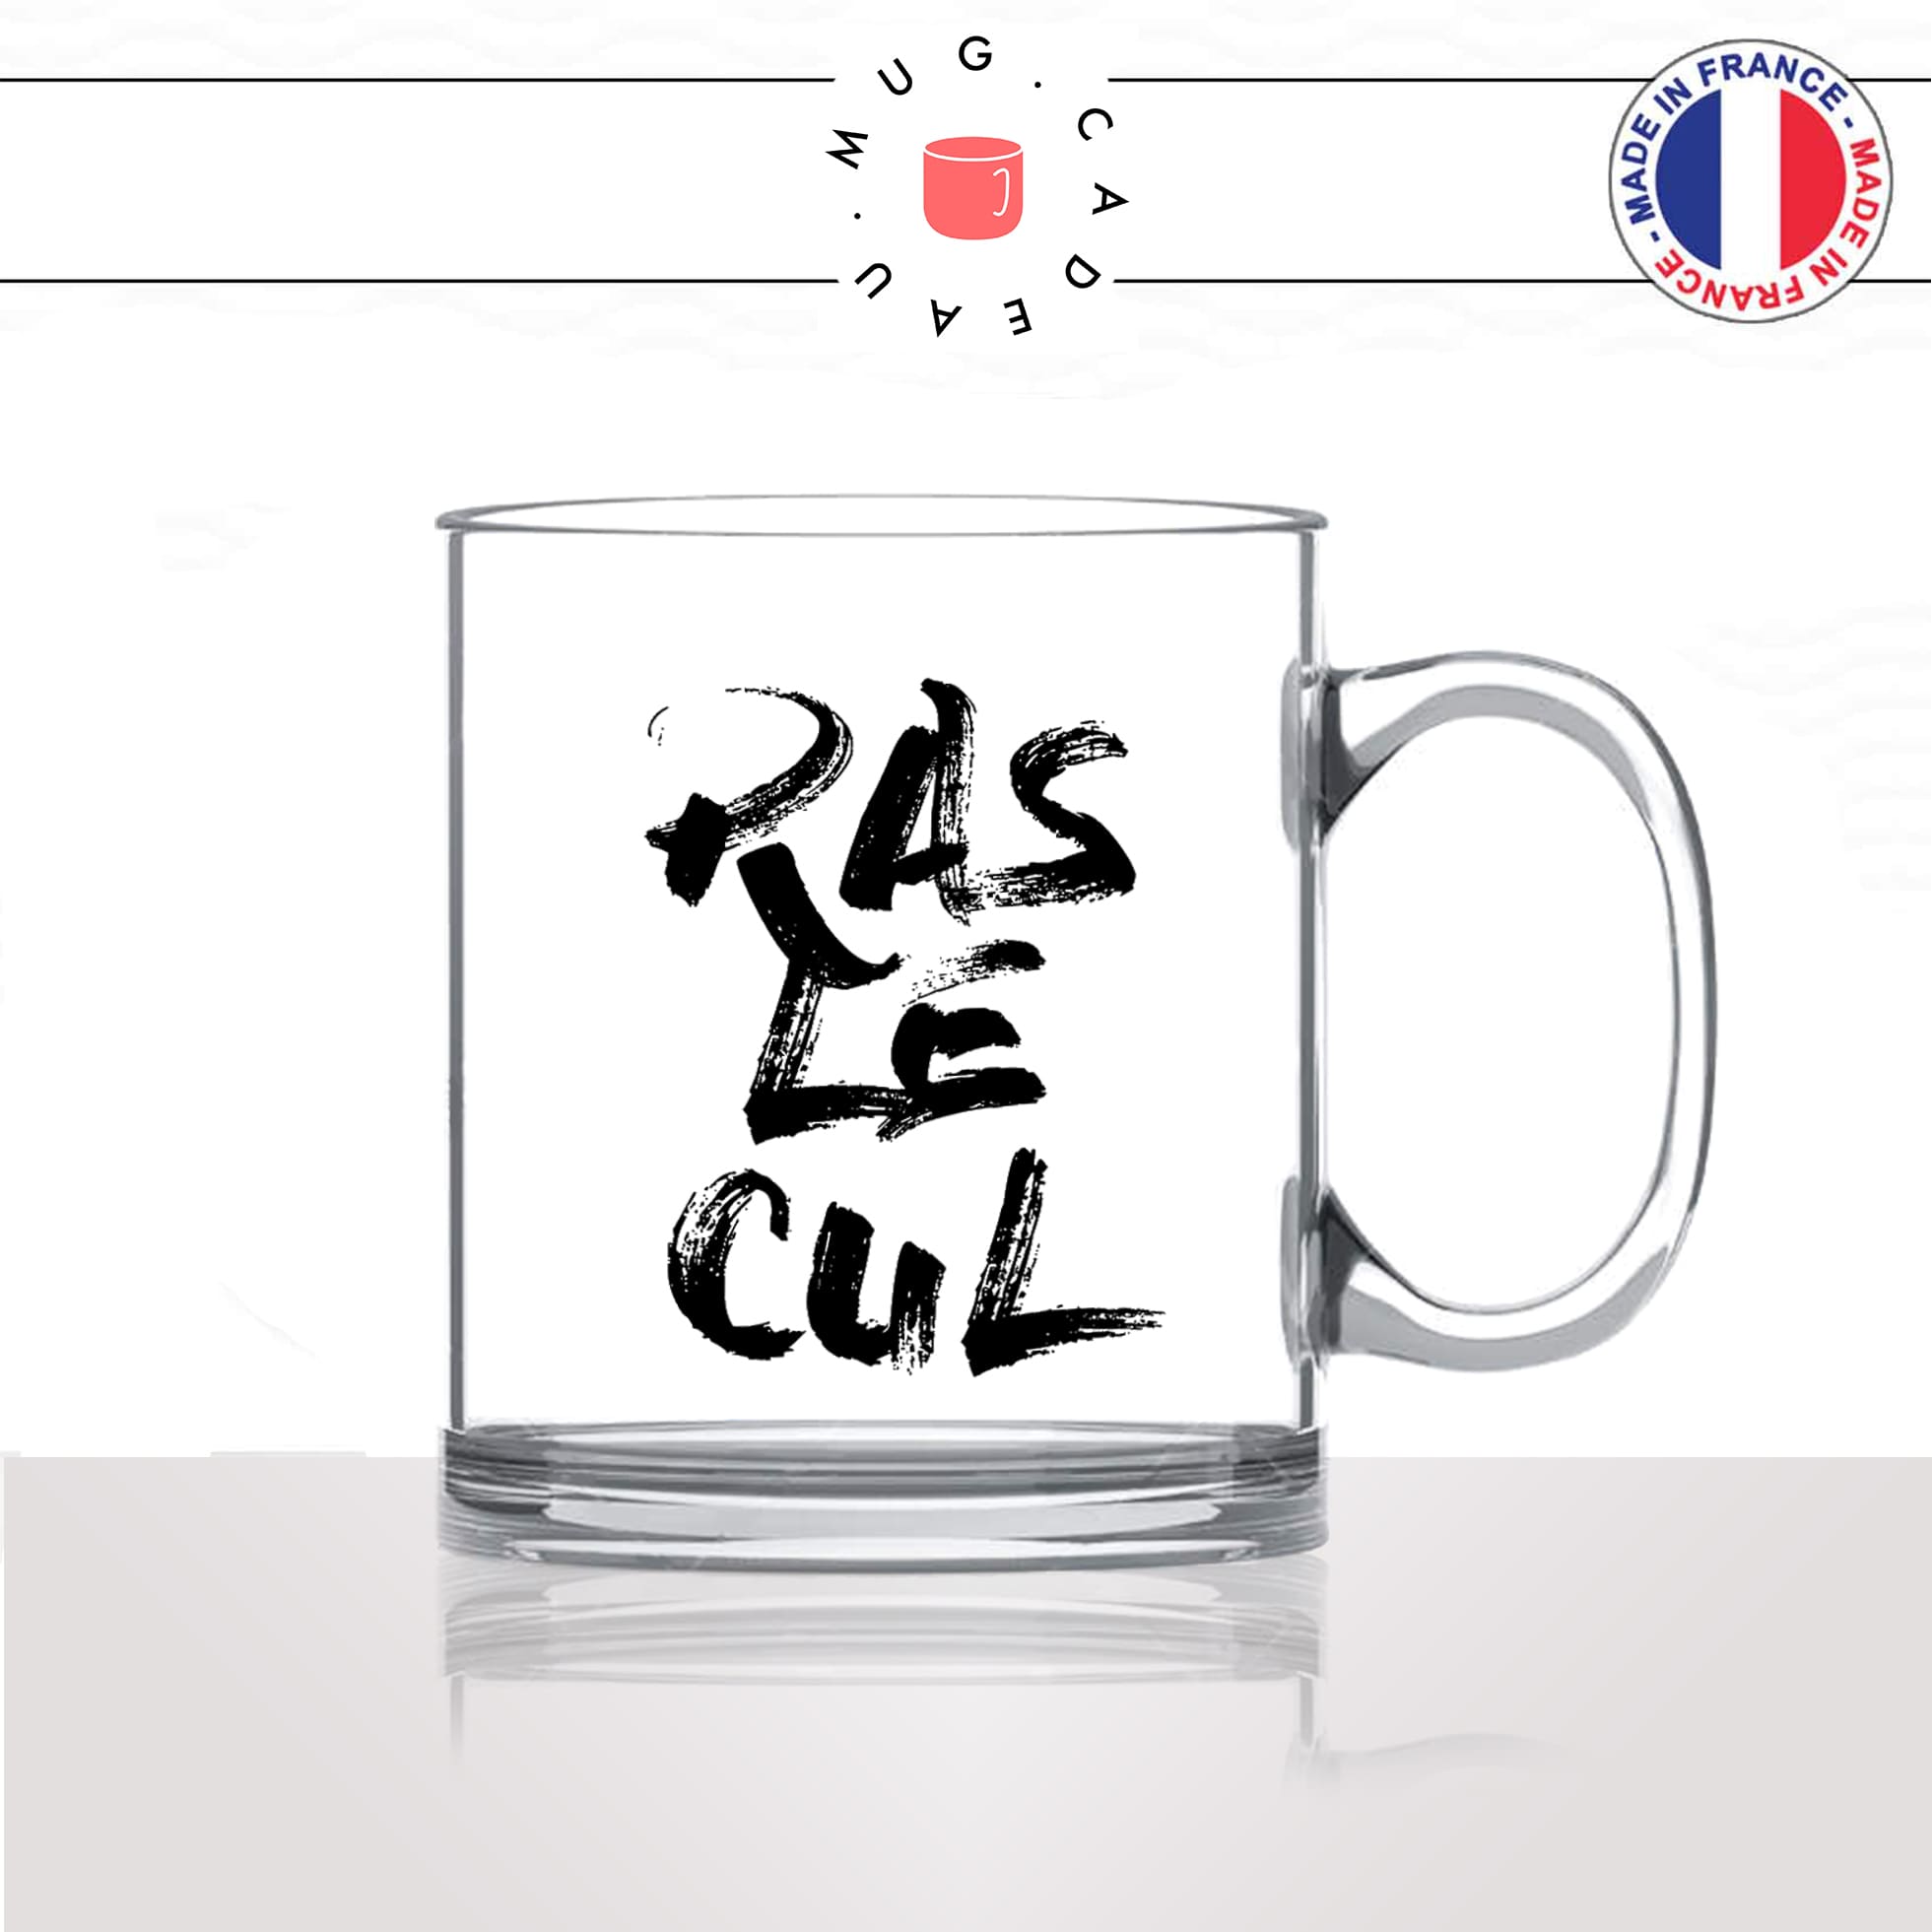 mug-tasse-en-verre-transparent-glass-ras-le-cul-jen-ai-marre-expression-phrase-fransaice-humour-fun-idée-cadeau-originale-cool2